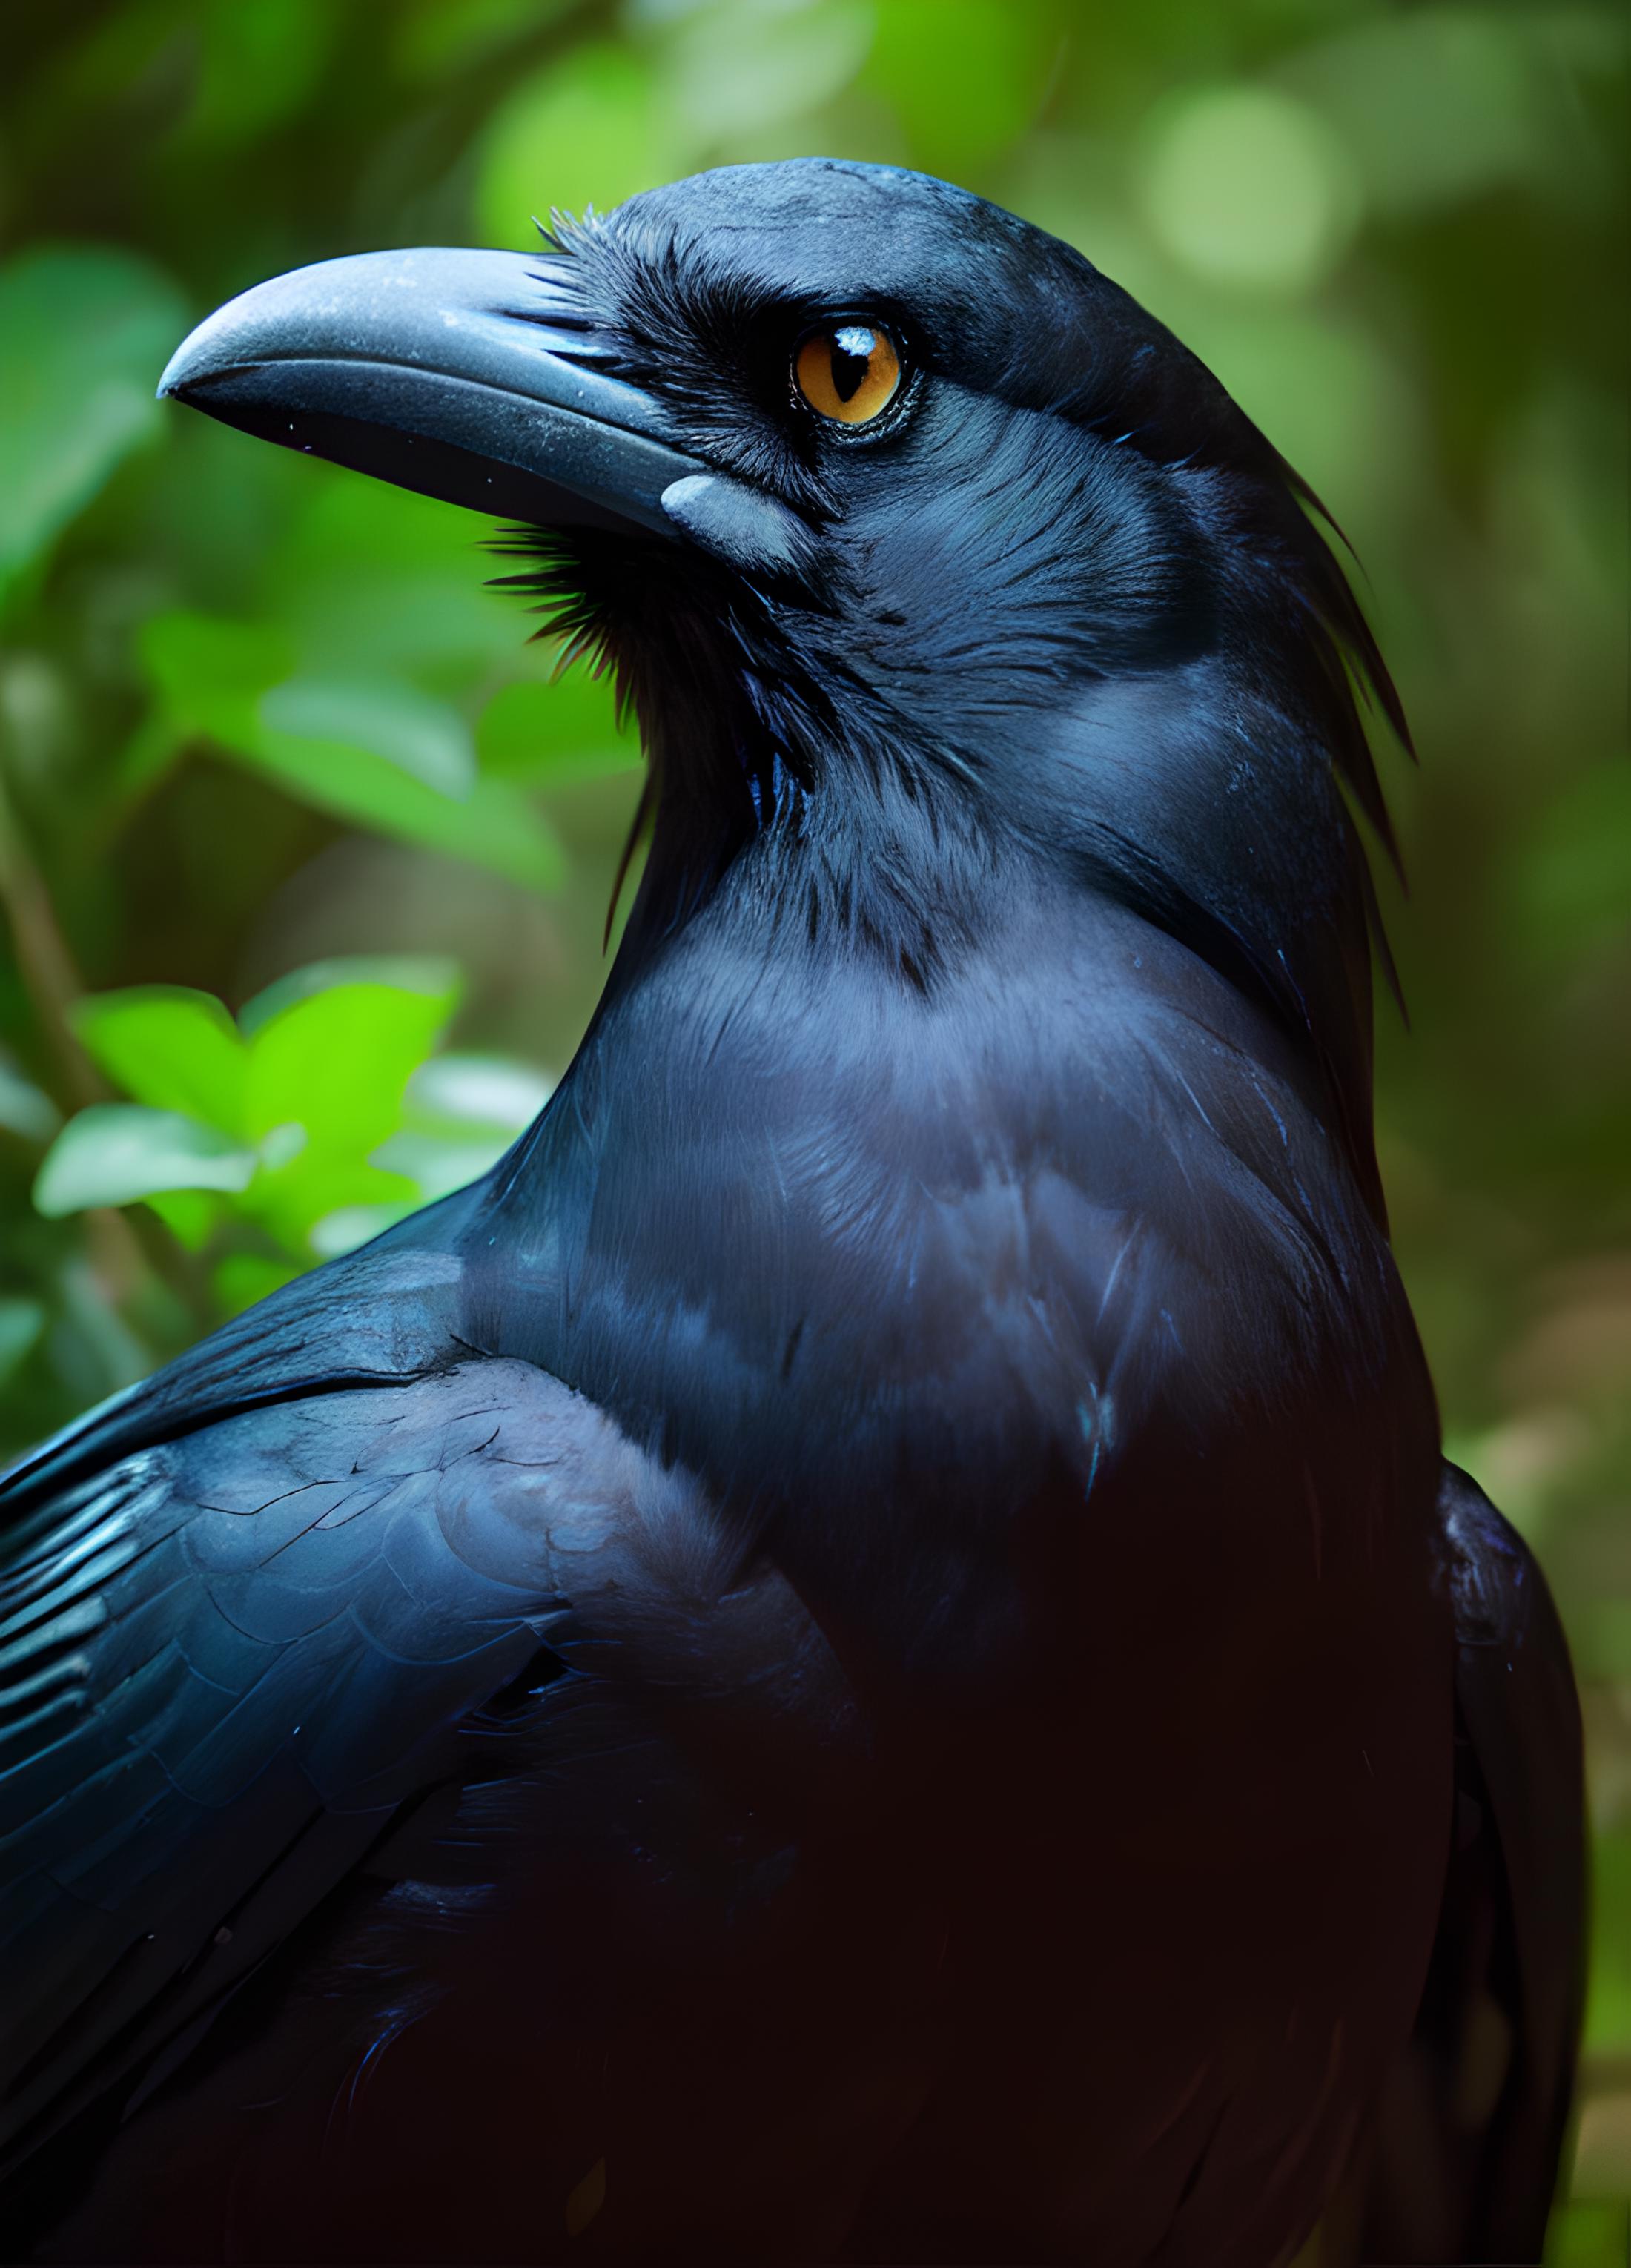 Anthro Corvids (Crows, Ravens, ect) LoRA image by anothuoretta